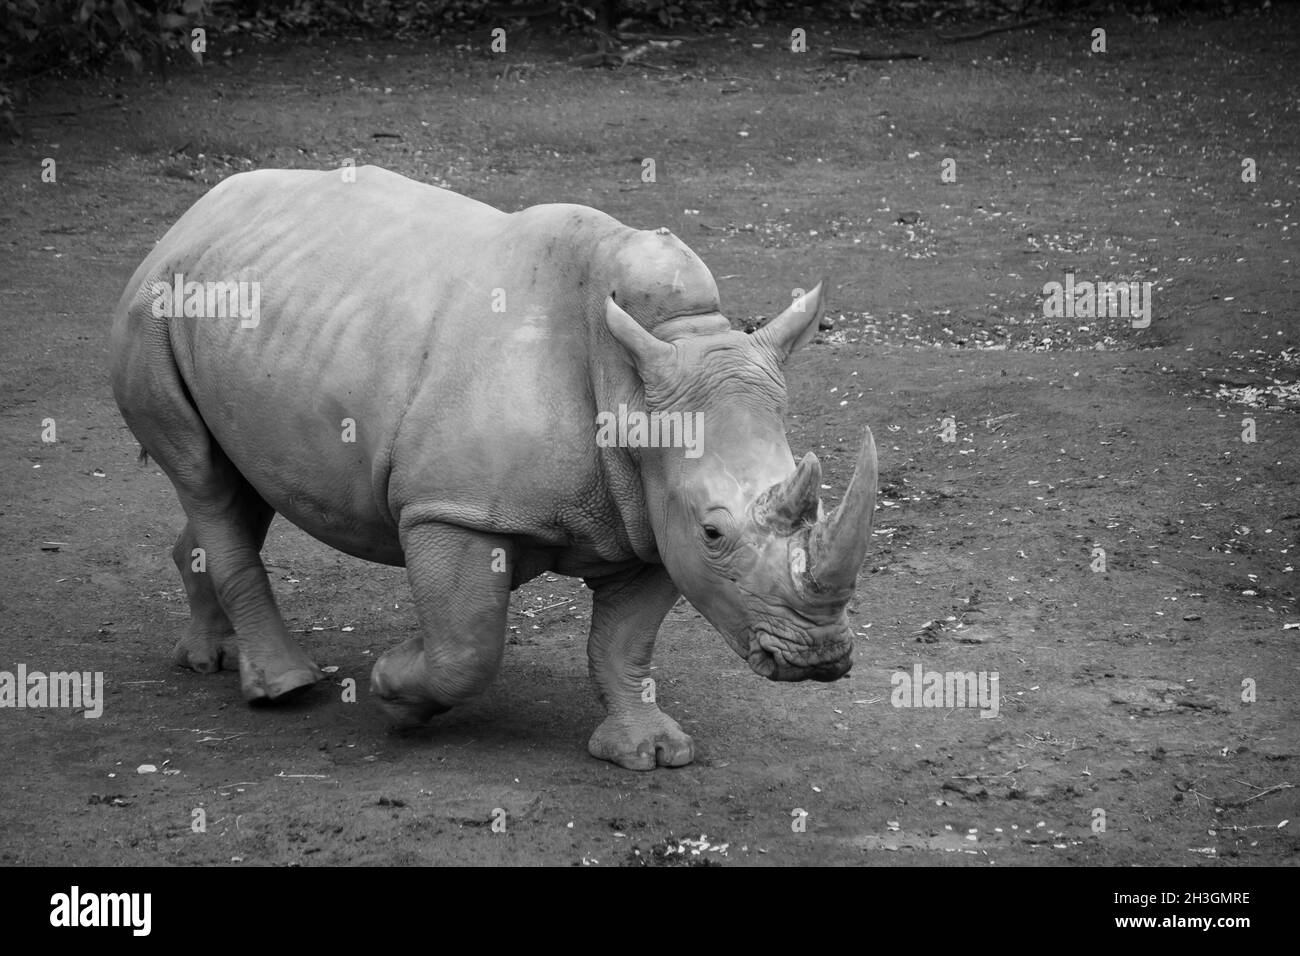 Grayscale of a rhinoceros walking Stock Photo